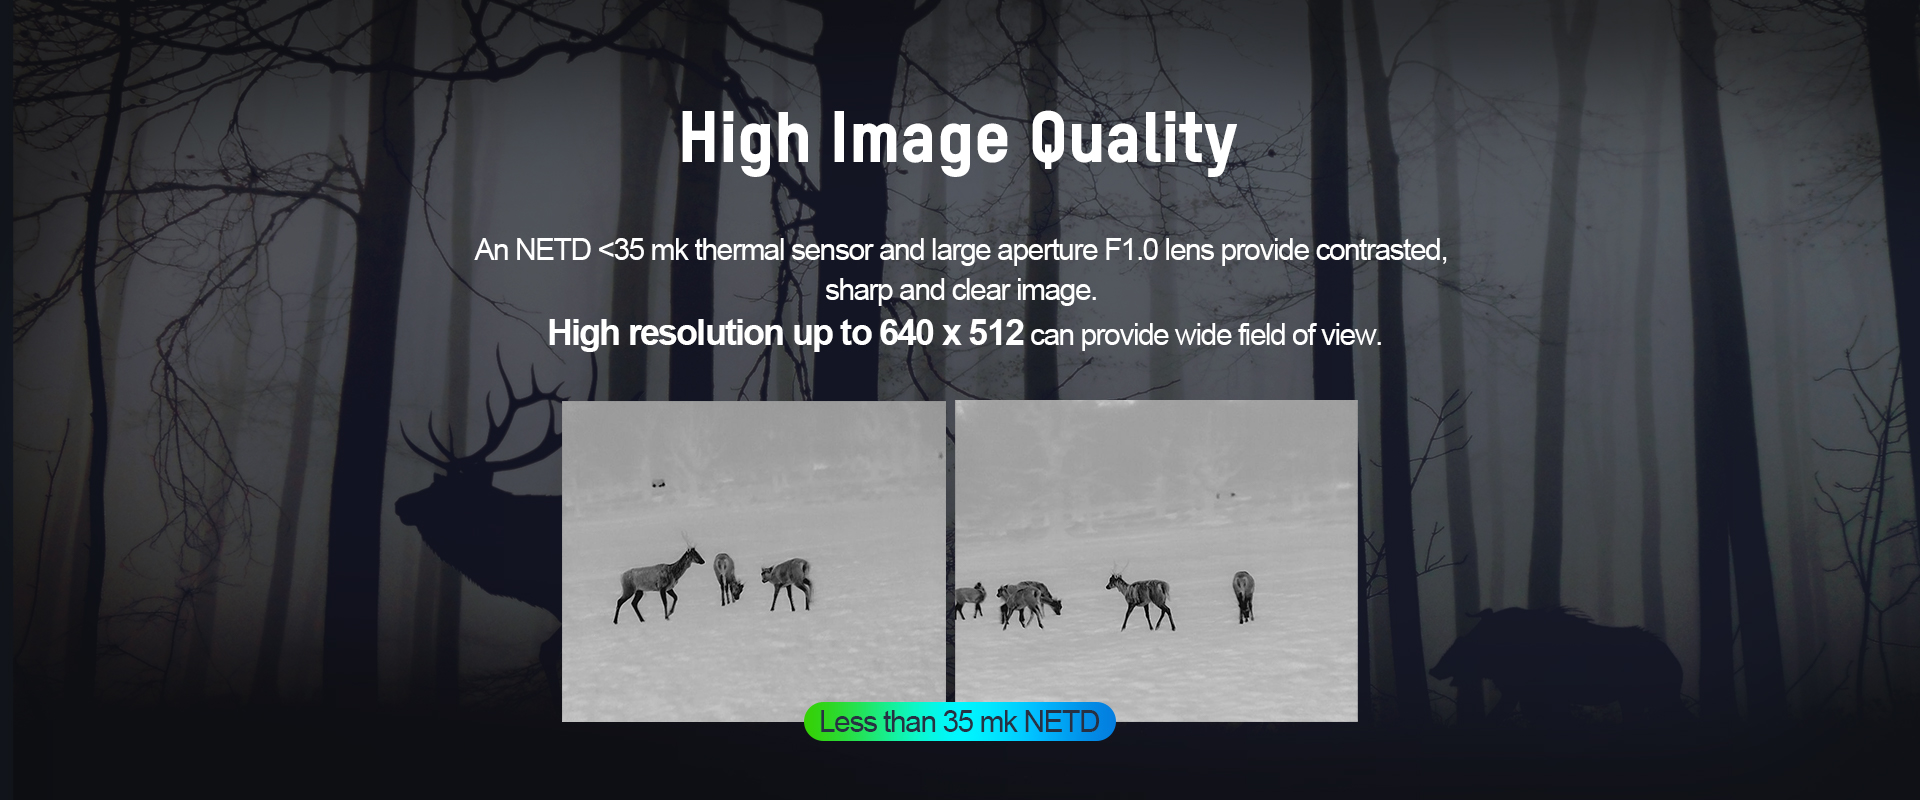 01-High Image Quality_OWL.jpg